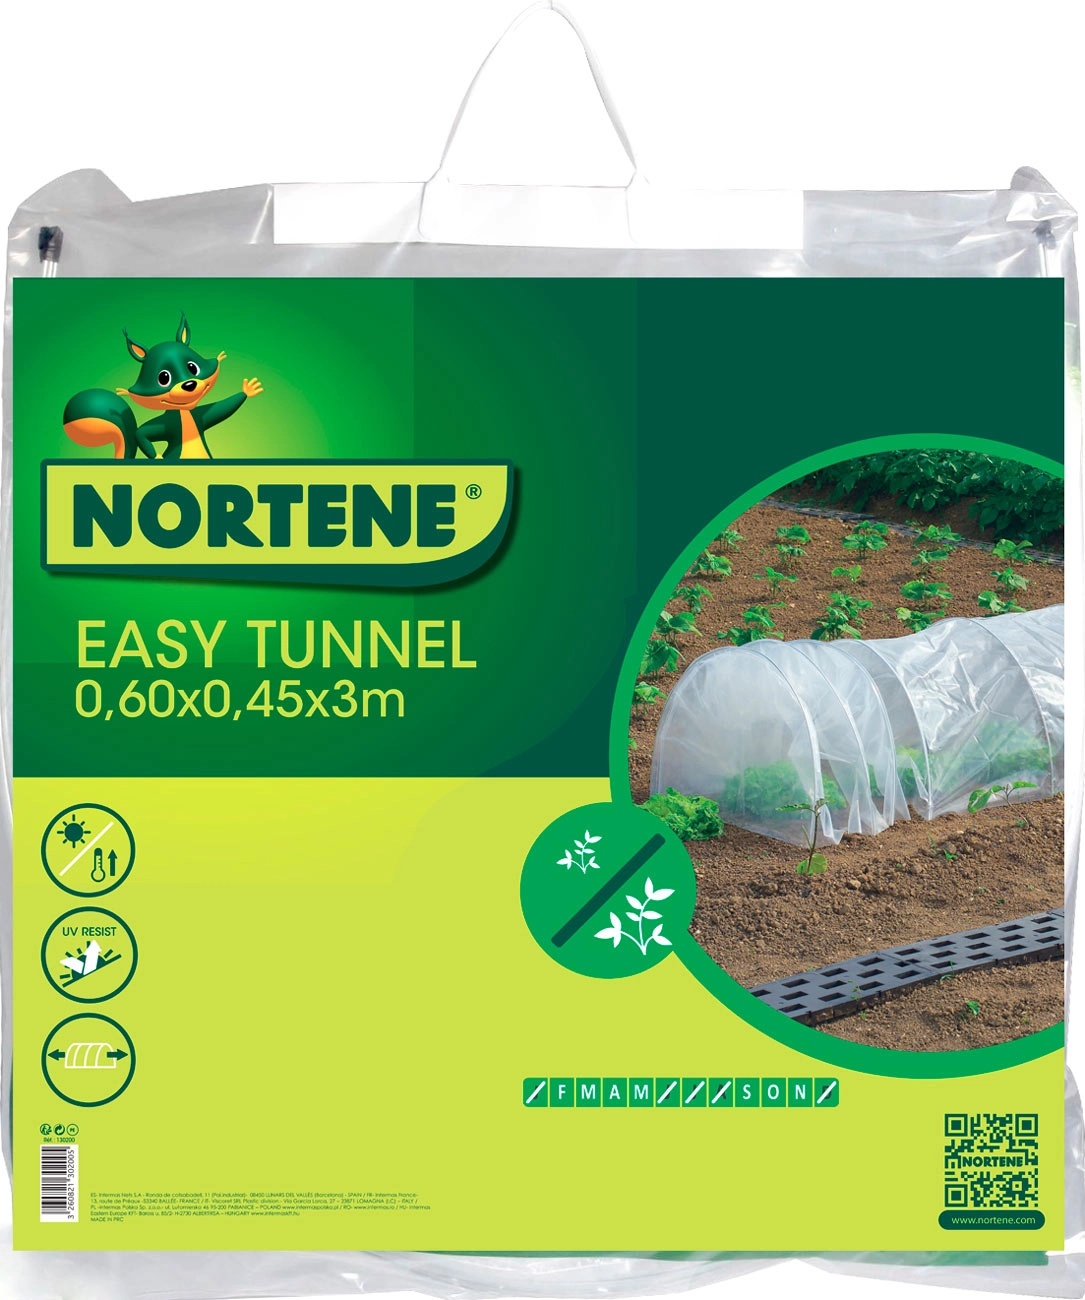 Nortene Easy Tunnel leszúrható, mobil fóliaalagút